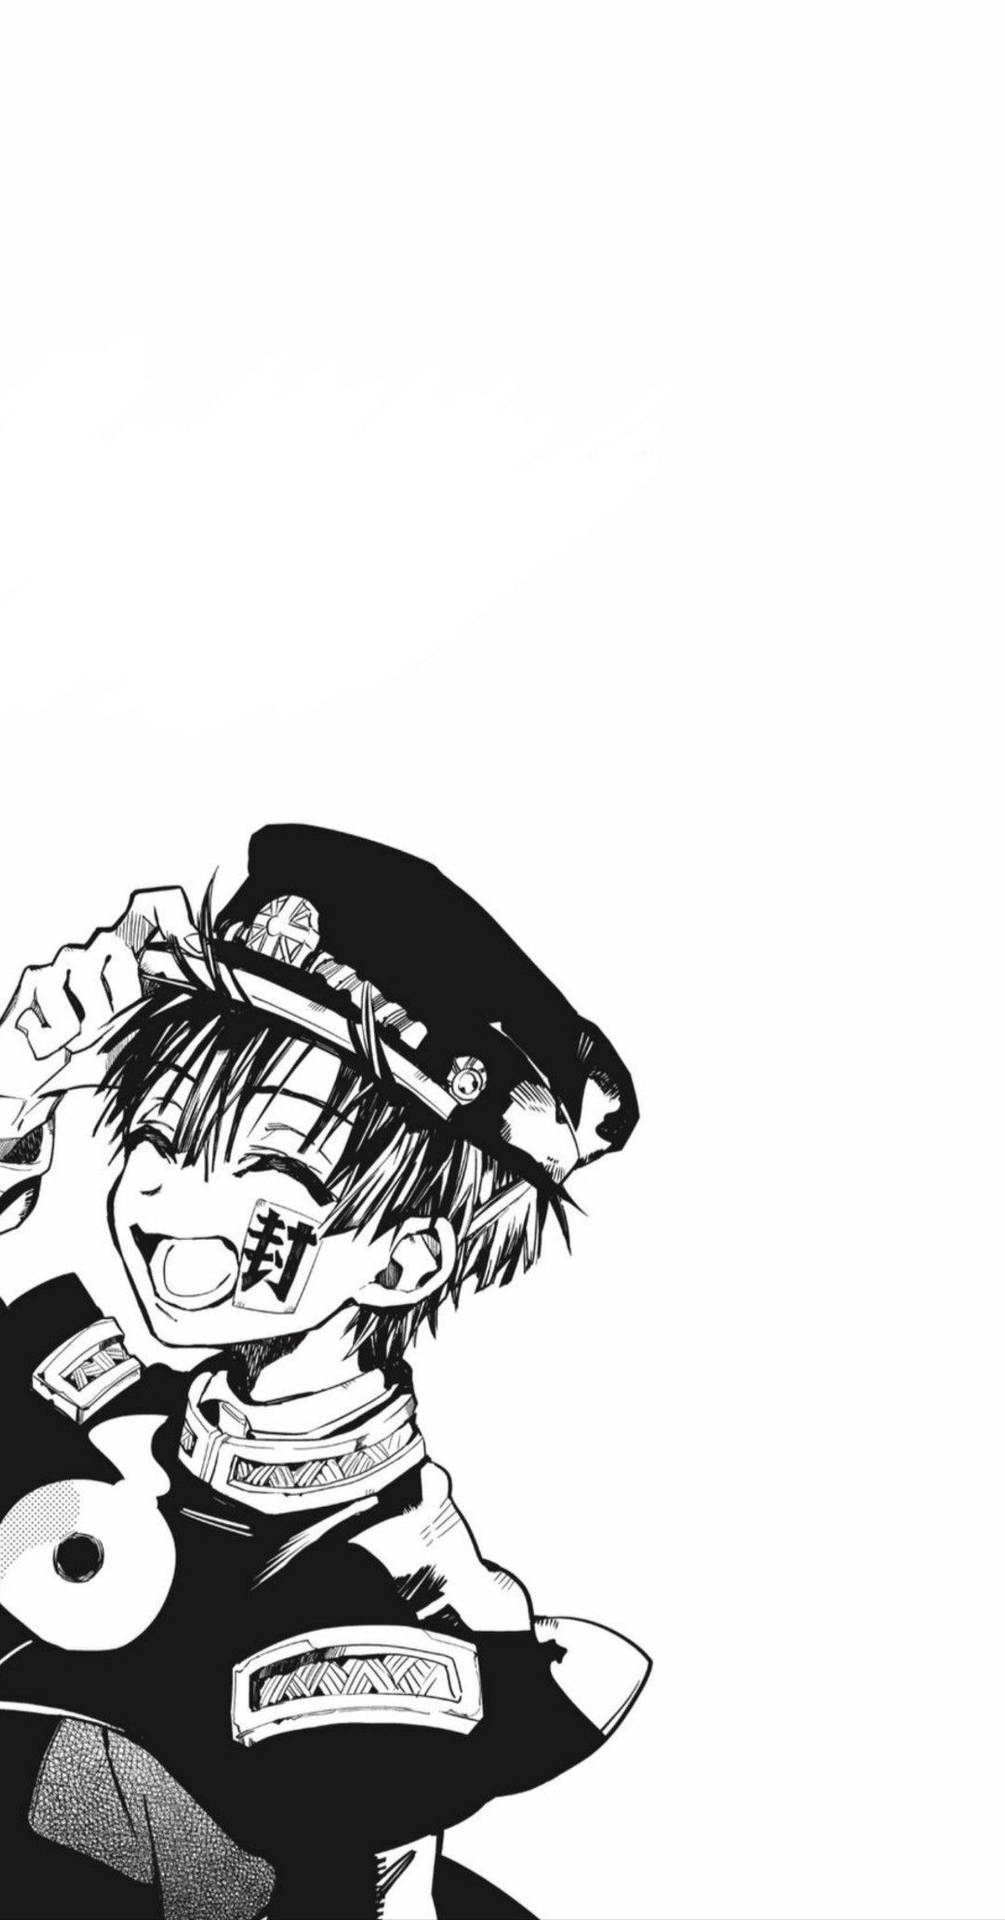 Manga 1080X2064 Wallpaper and Background Image